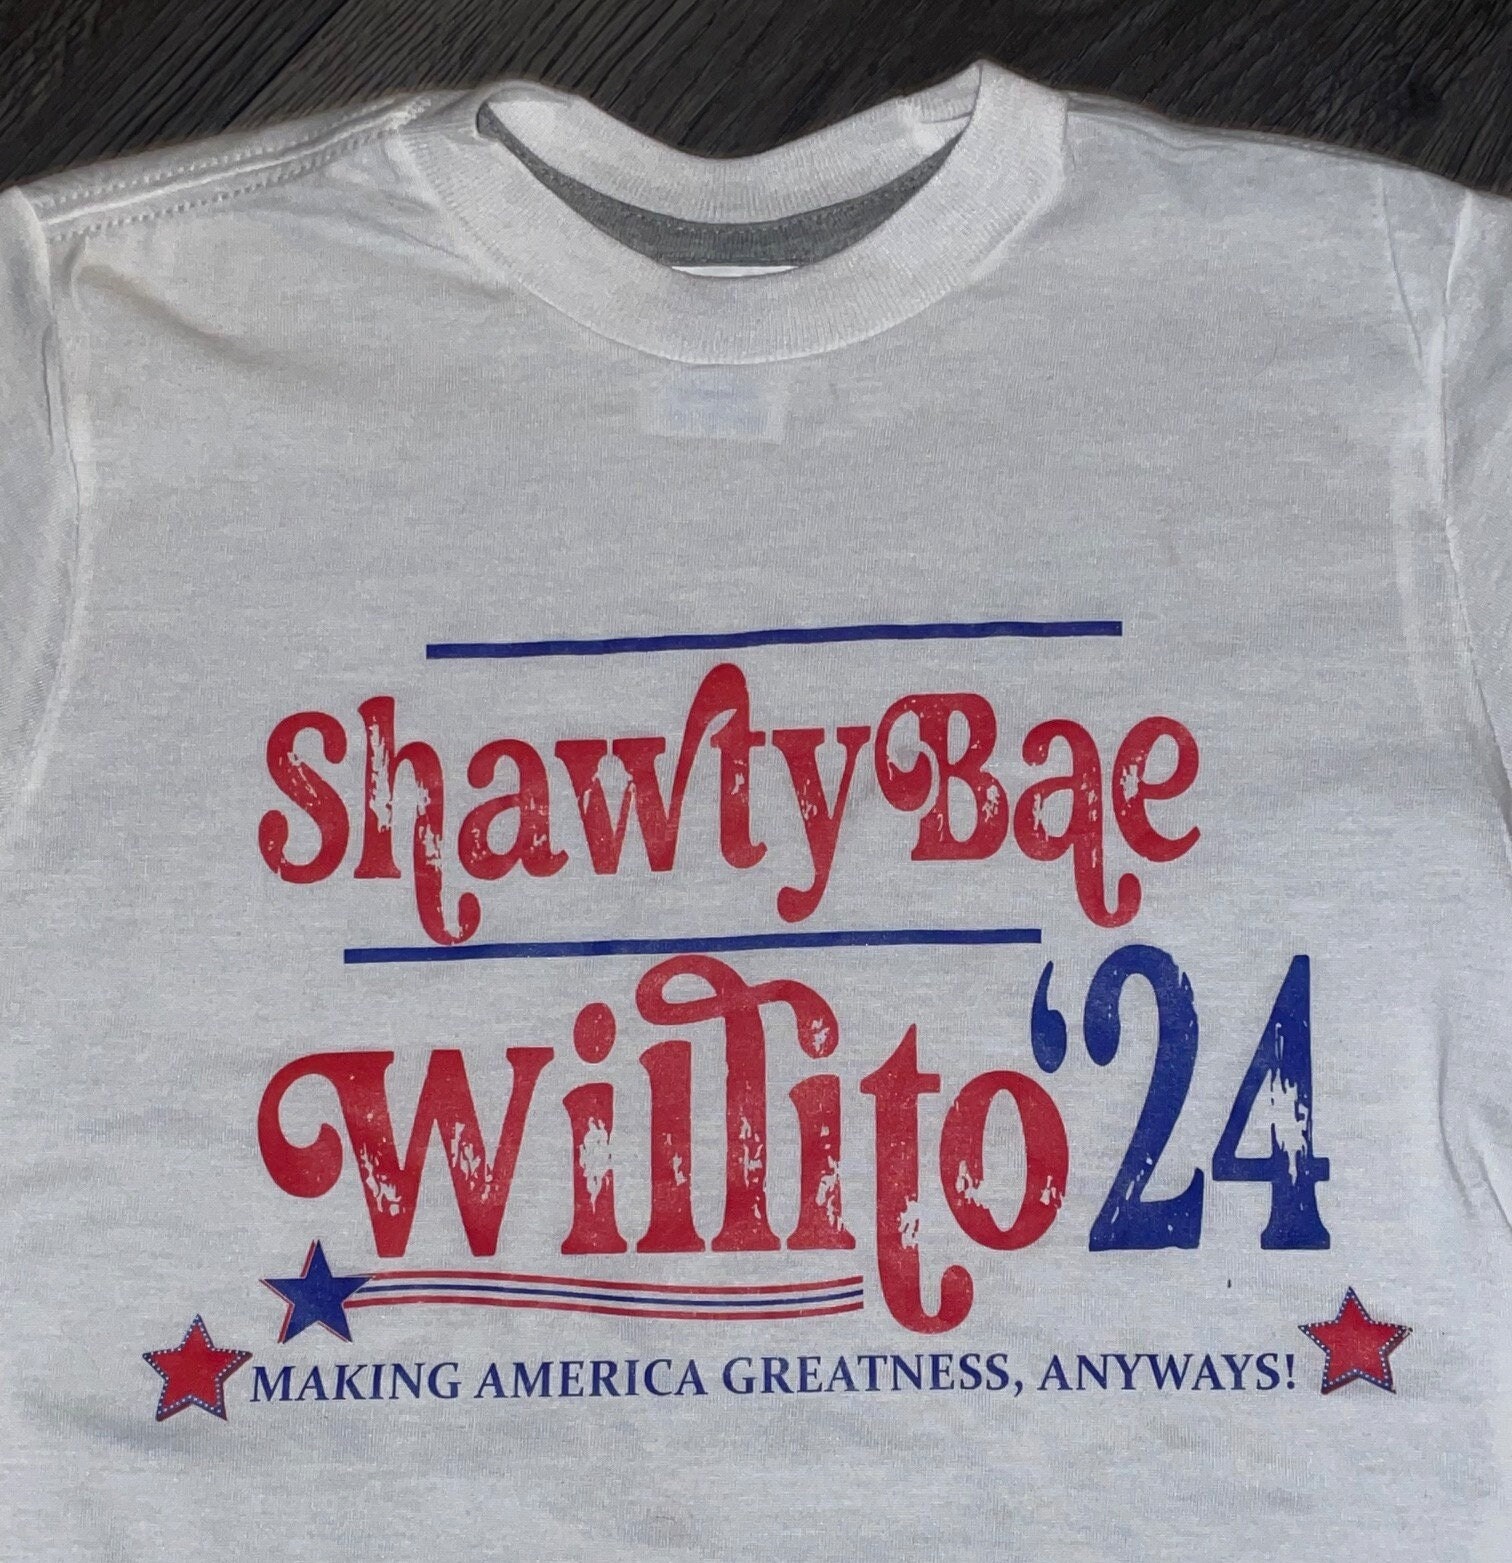  Surprise Shawty - Men's Adult Short Sleeve T-Shirt : Clothing,  Shoes & Jewelry